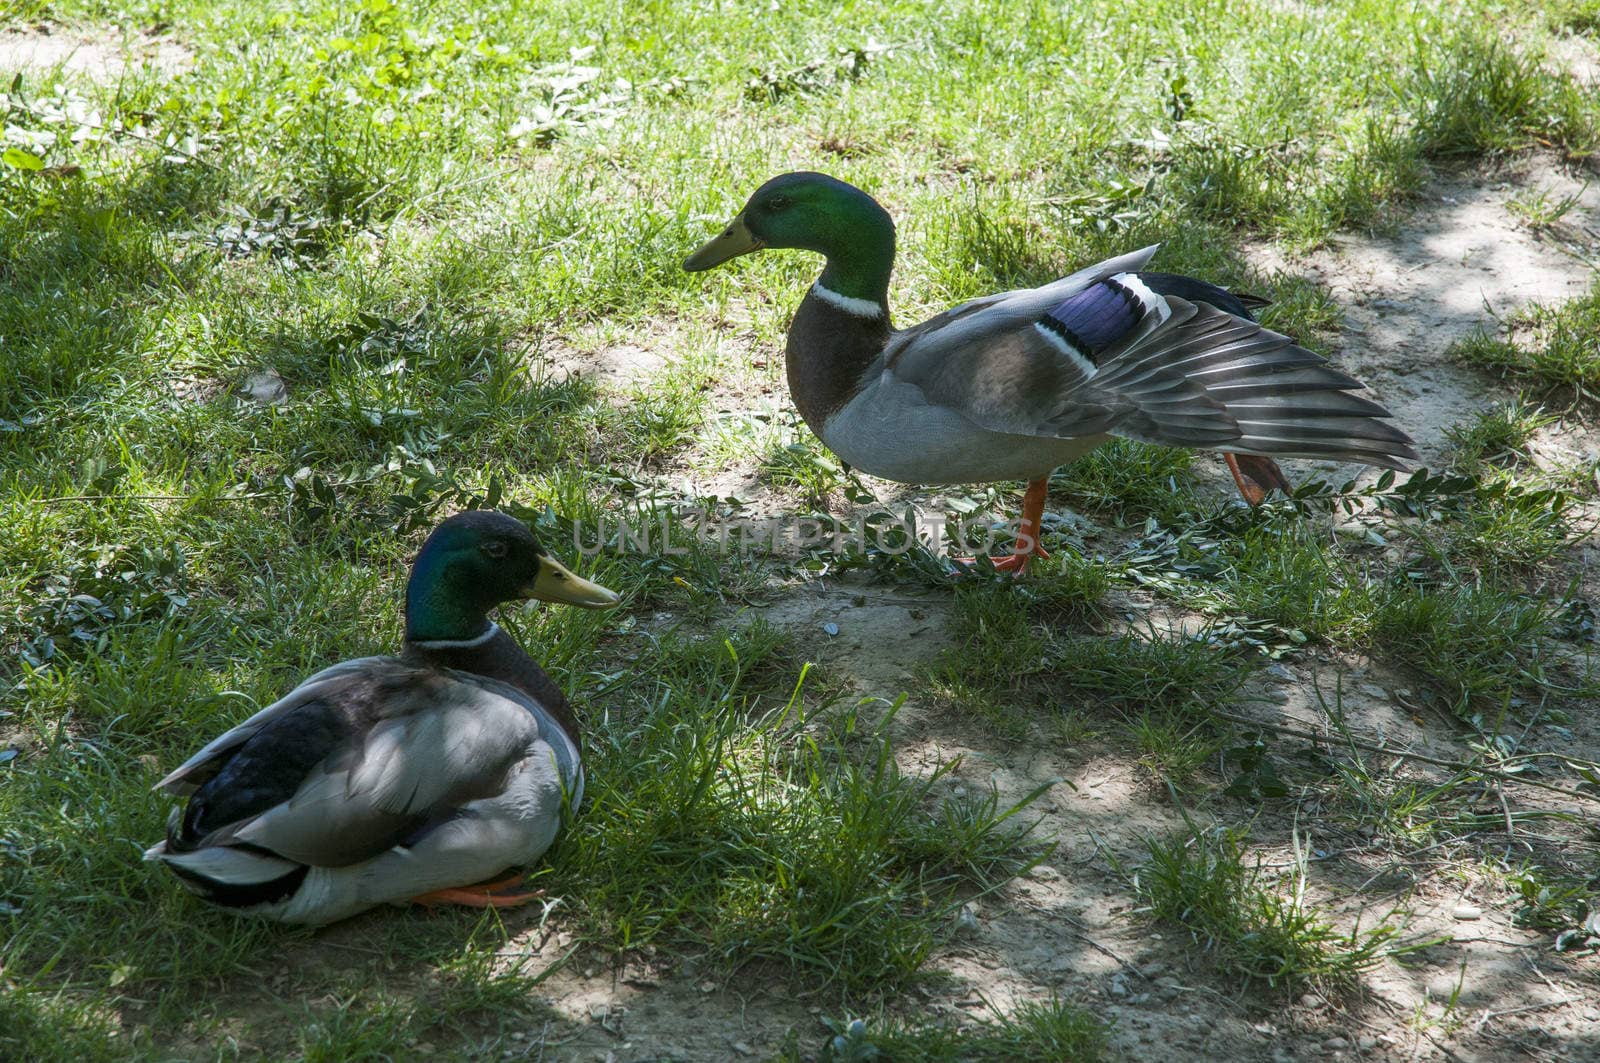 Green Collar ducks in the garden of the park